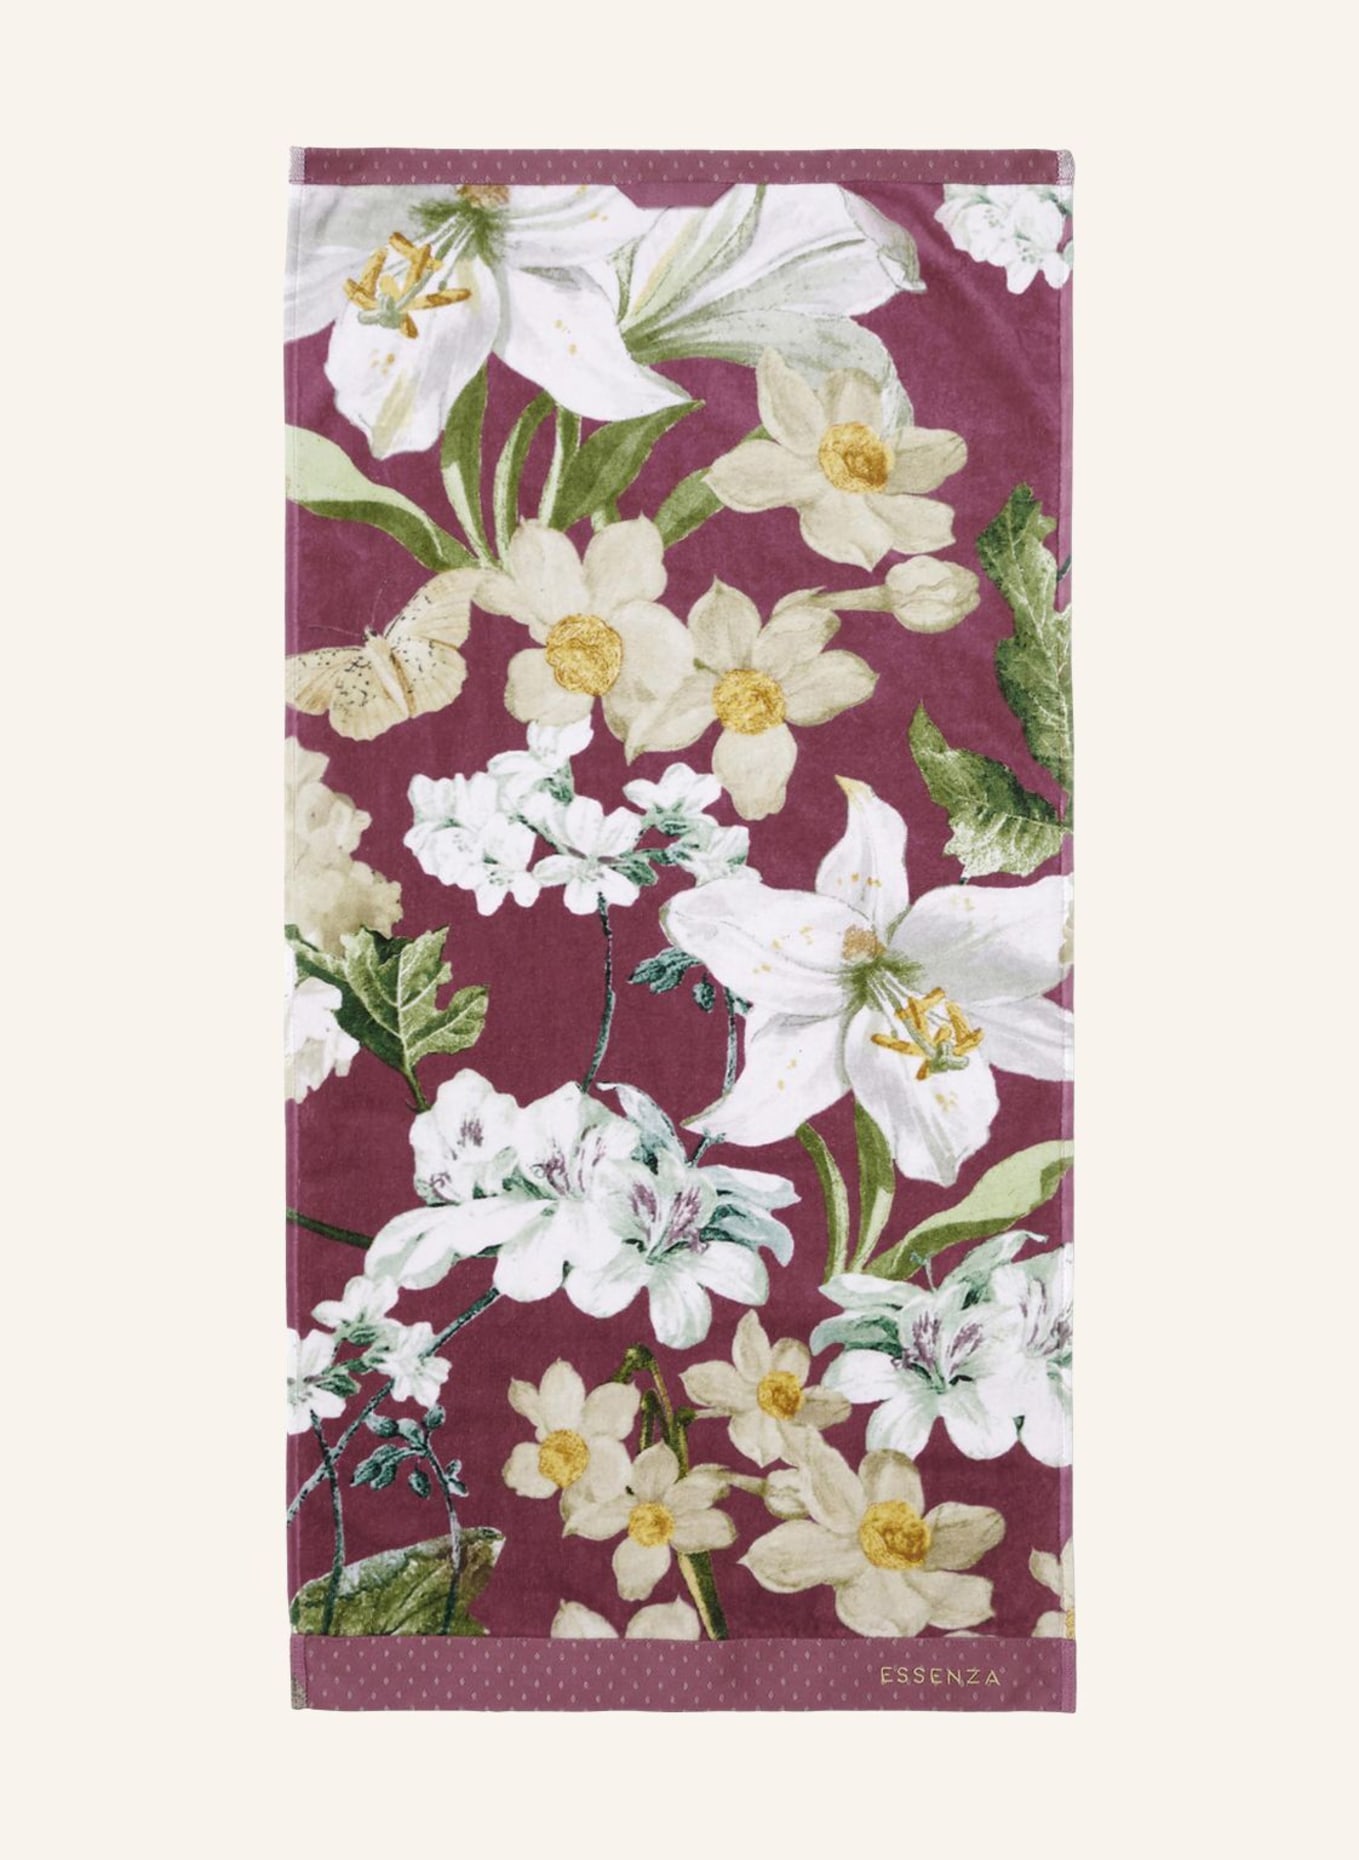 ESSENZA Handtuch ROSALEE, Farbe: LILA (Bild 1)